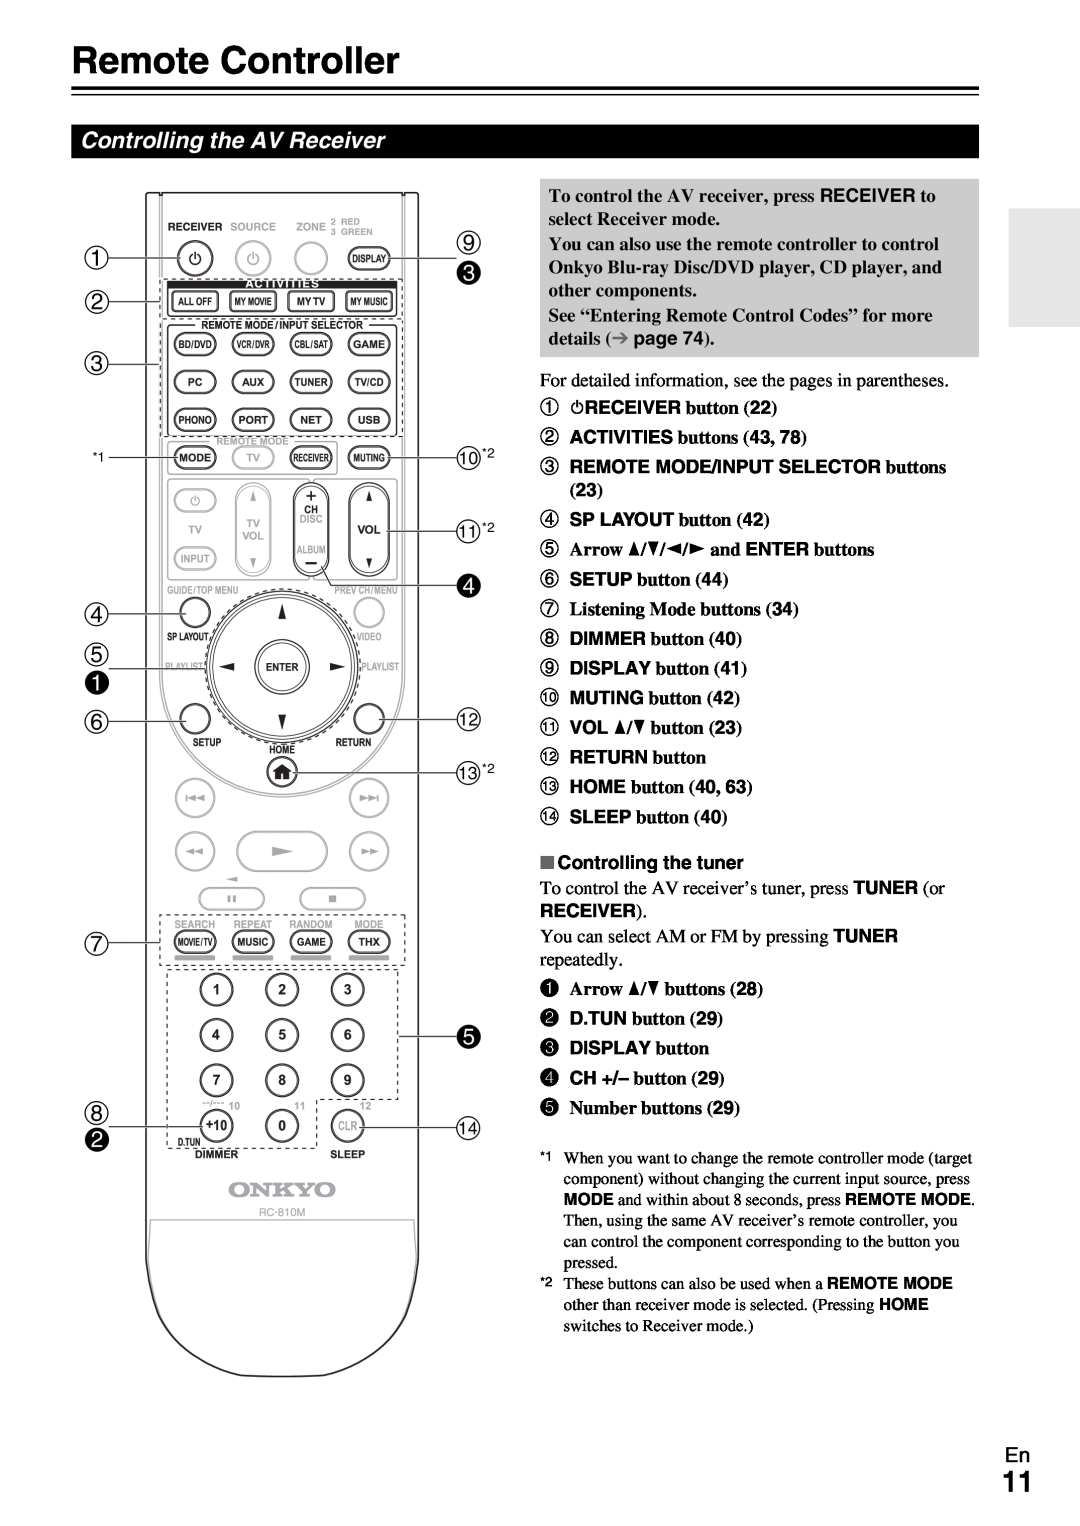 Onkyo TX-NR1009 Remote Controller, Controlling the AV Receiver, d d e a fl, g e h bn, cREMOTE MODE/INPUT SELECTOR buttons 